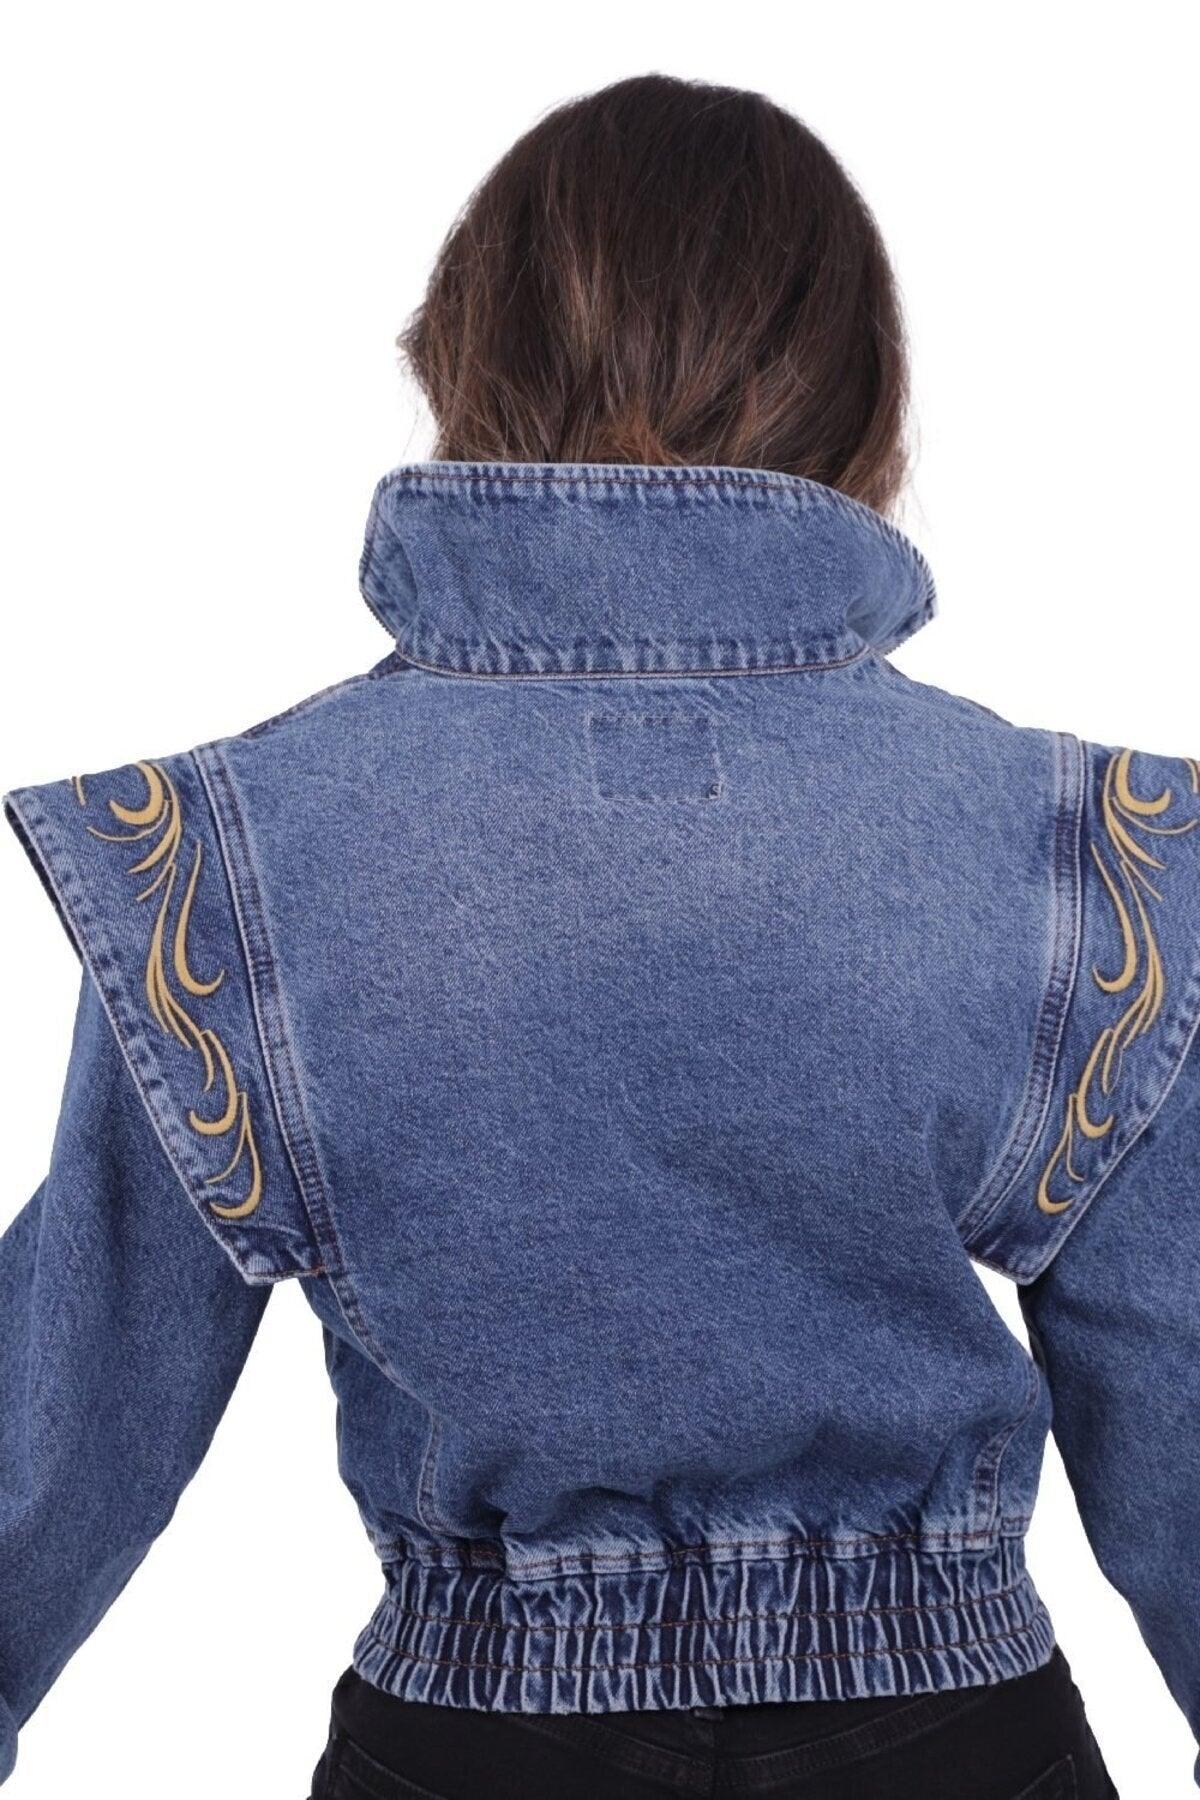 Women's Denim Jacket with Embroidered Shoulders, No Pocket, Elastic Waist, Zippered Bomber Denim for All Seasons - Swordslife